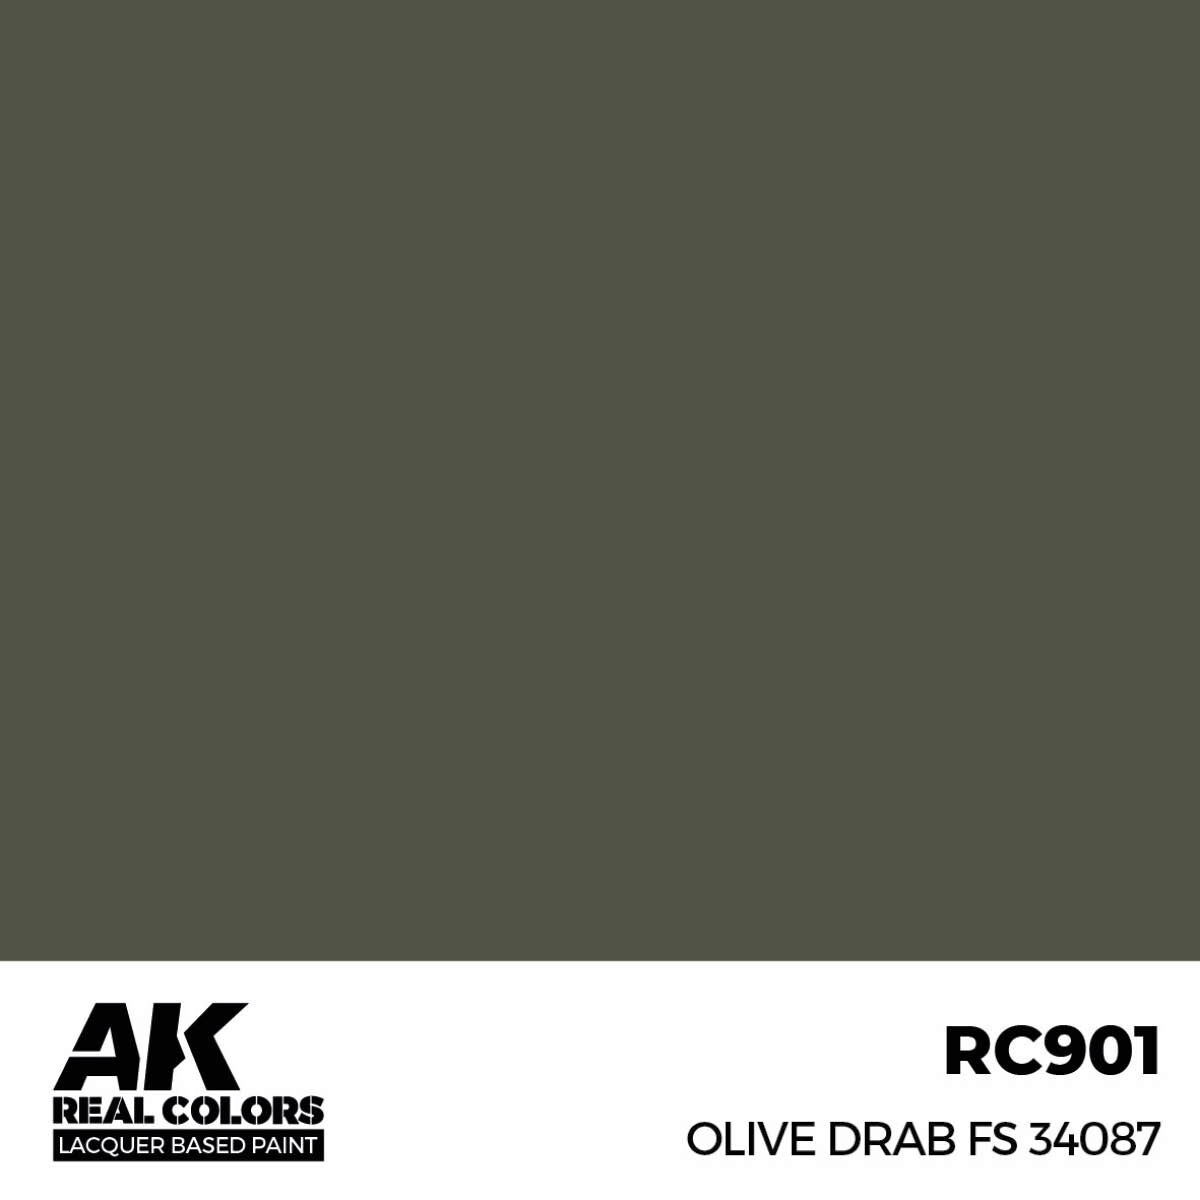 AK RC901 Real Colors Olive Drab FS 34087 17 ml.